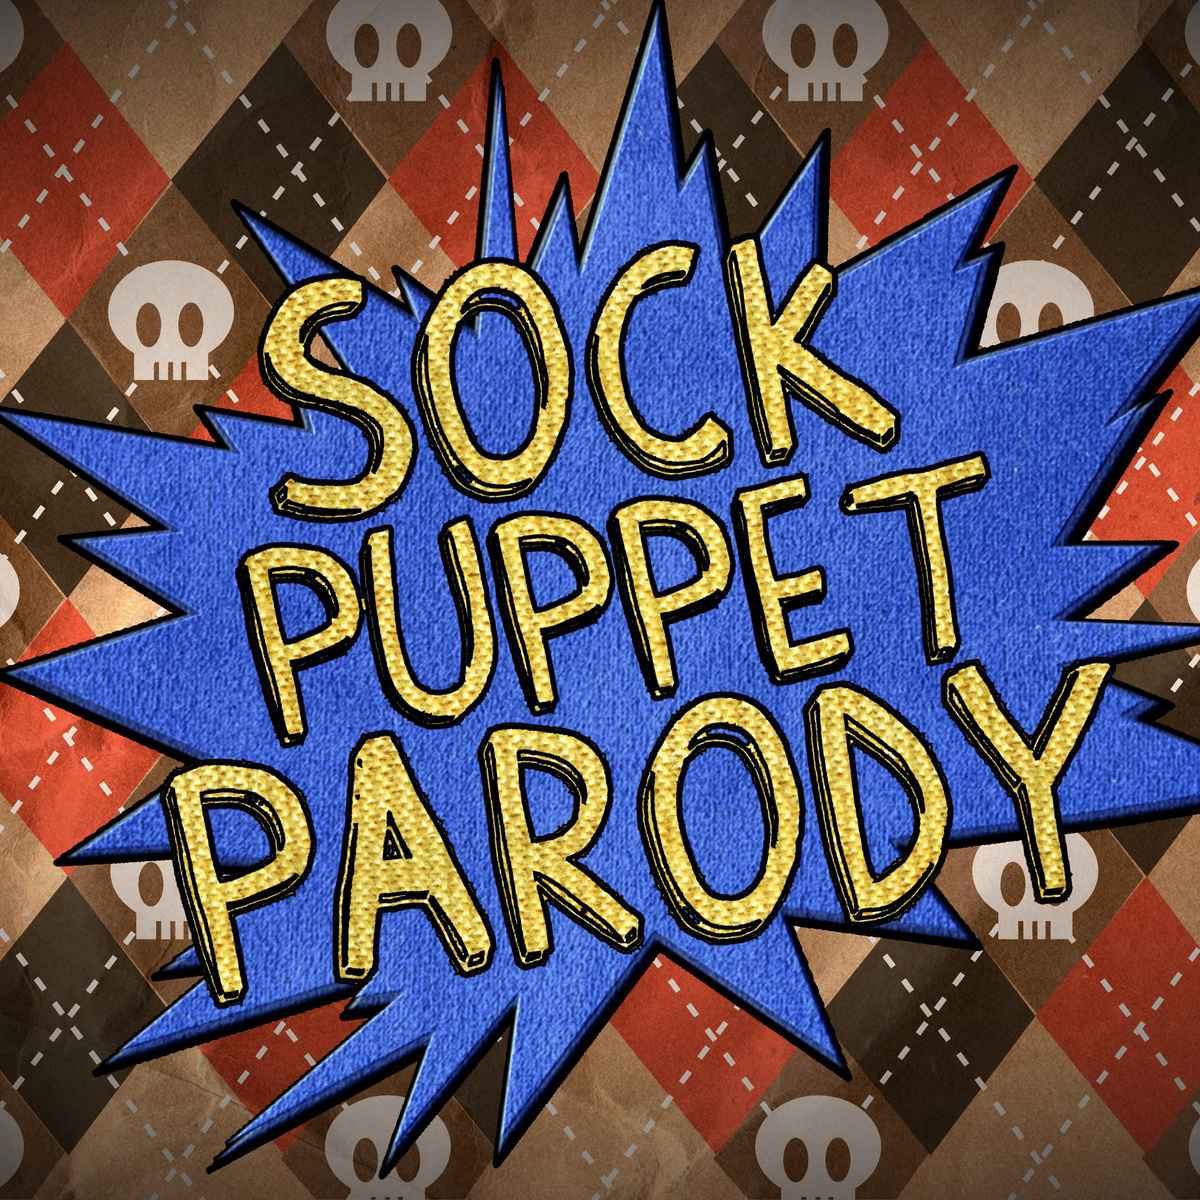 Sock Puppet Parody